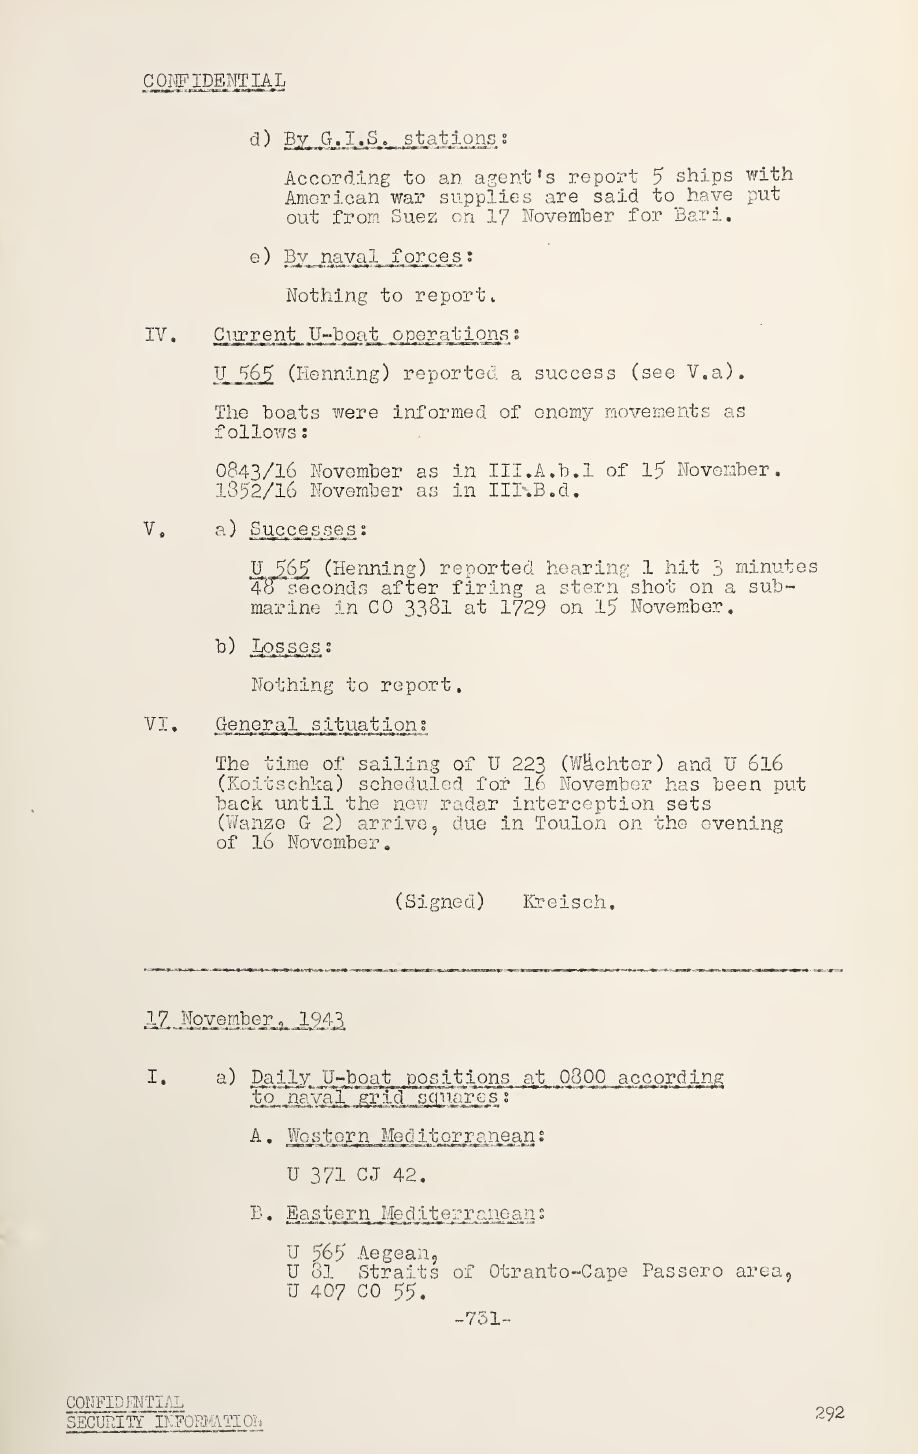 War Diary of Captain U-Boats Sample Entry 8